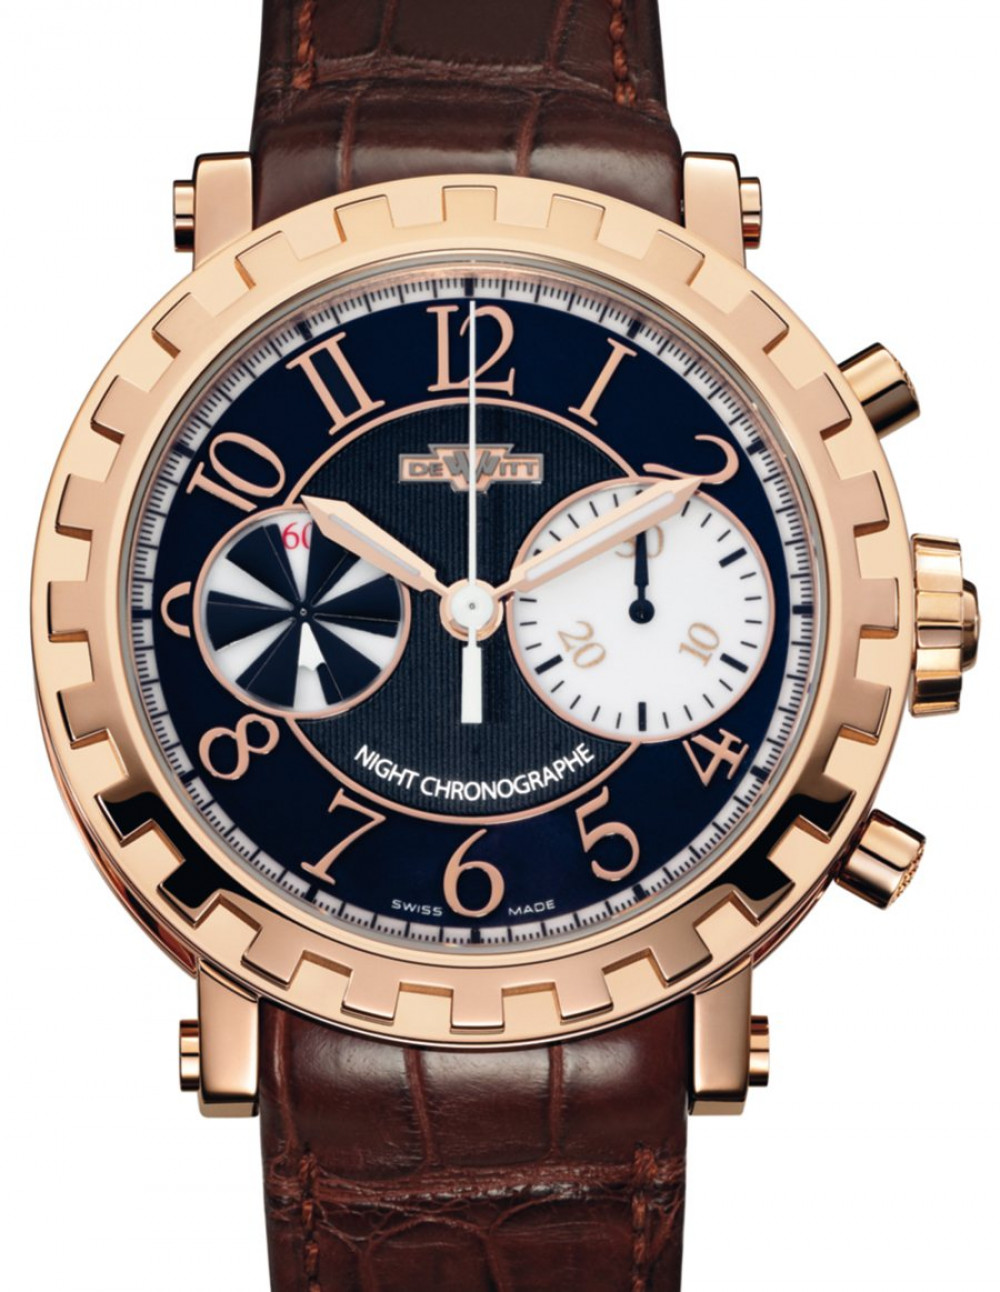 Zegarek firmy DeWitt, model Academia Chronographe Séquentiel